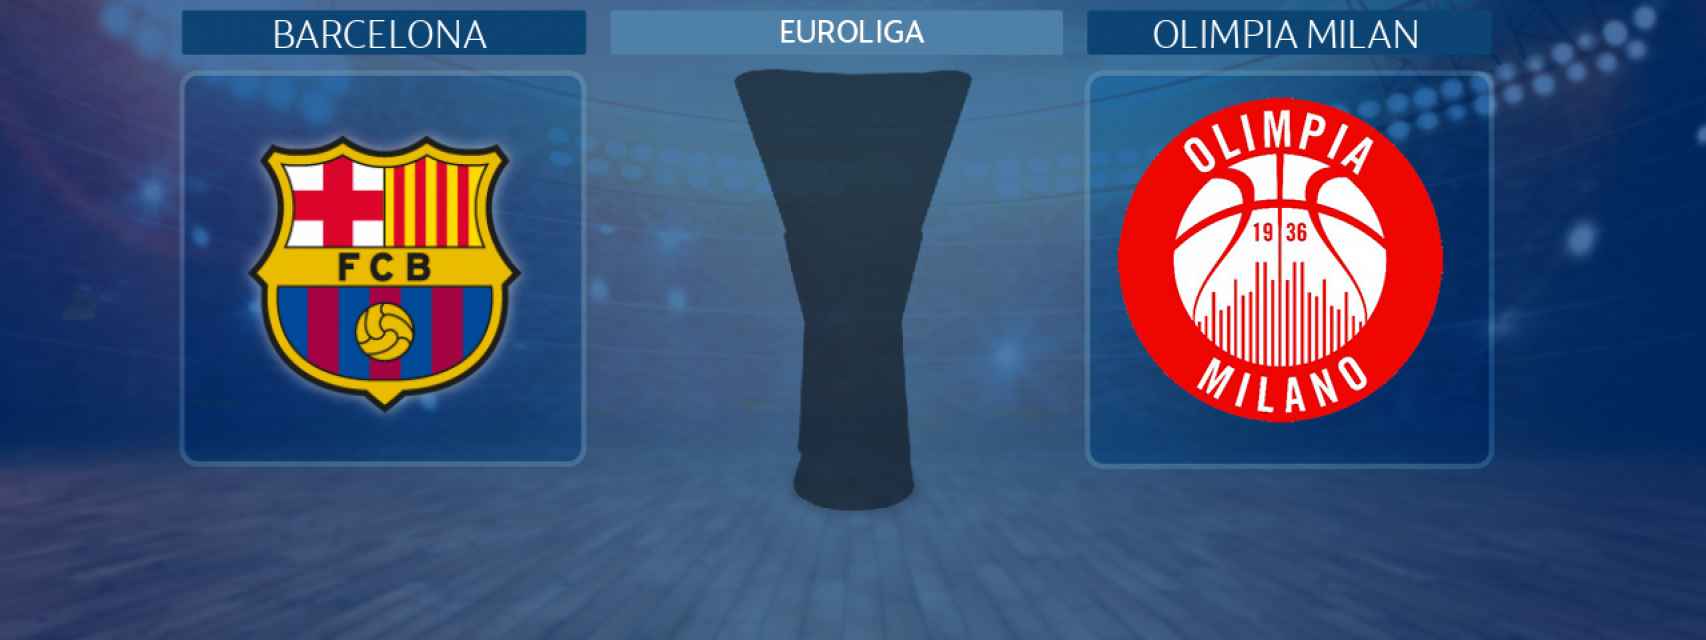 Barcelona - Olimpia Milan, partido de la Euroliga